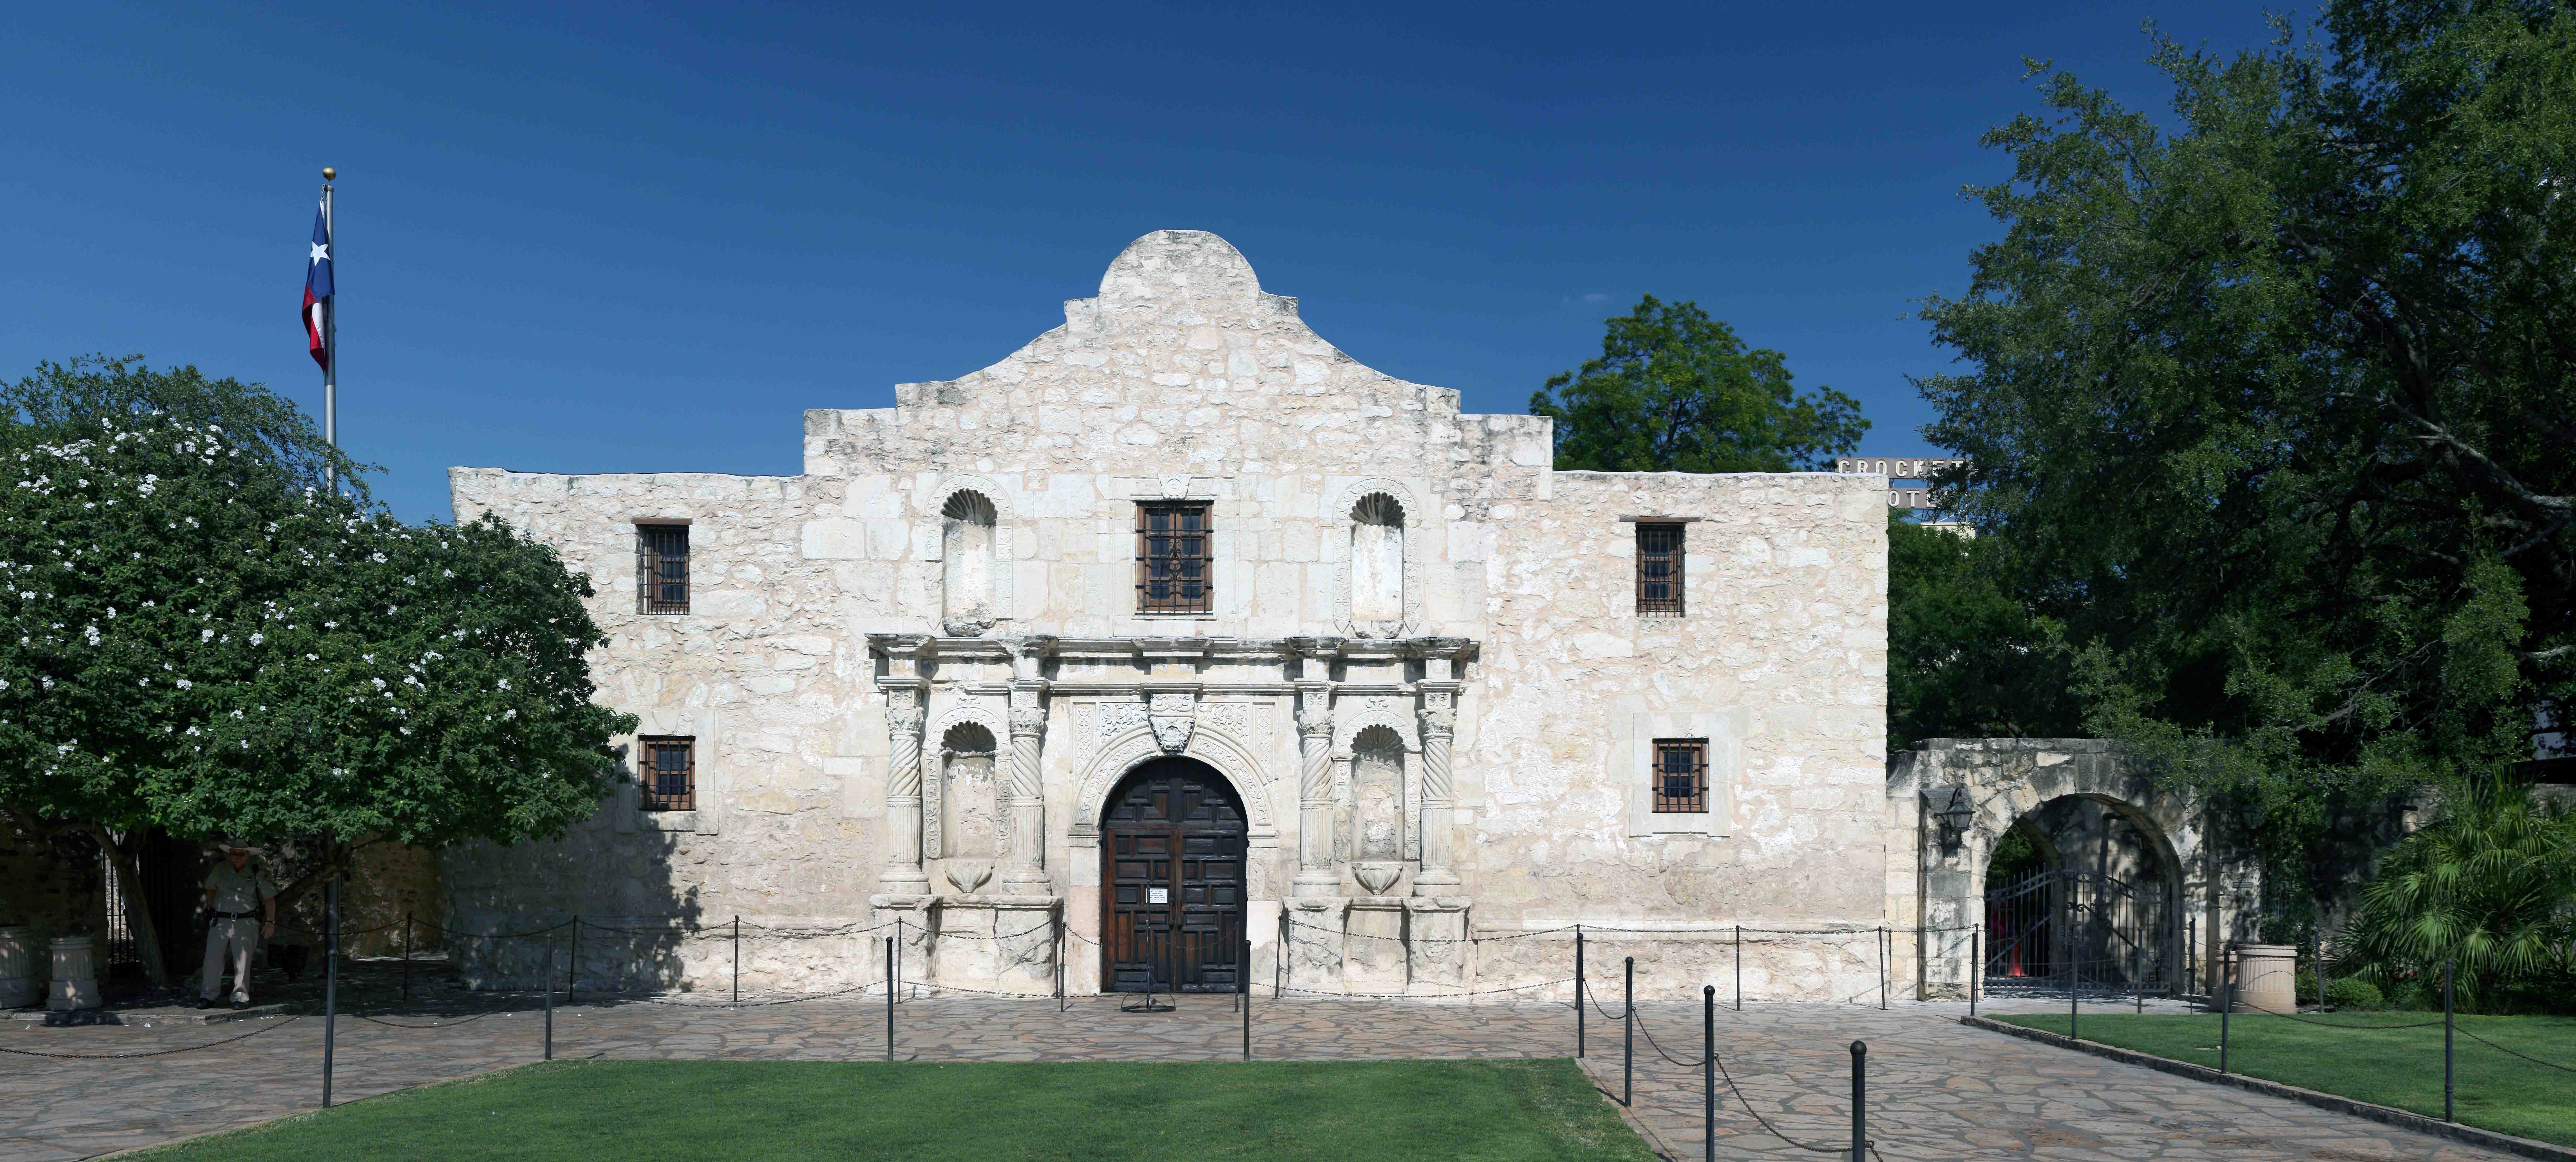 The Alamo, formerly part of Mission San Antonio de Valero, San Antonio, Texas (photo: Daniel Schwen, CC BY-SA 4.0)